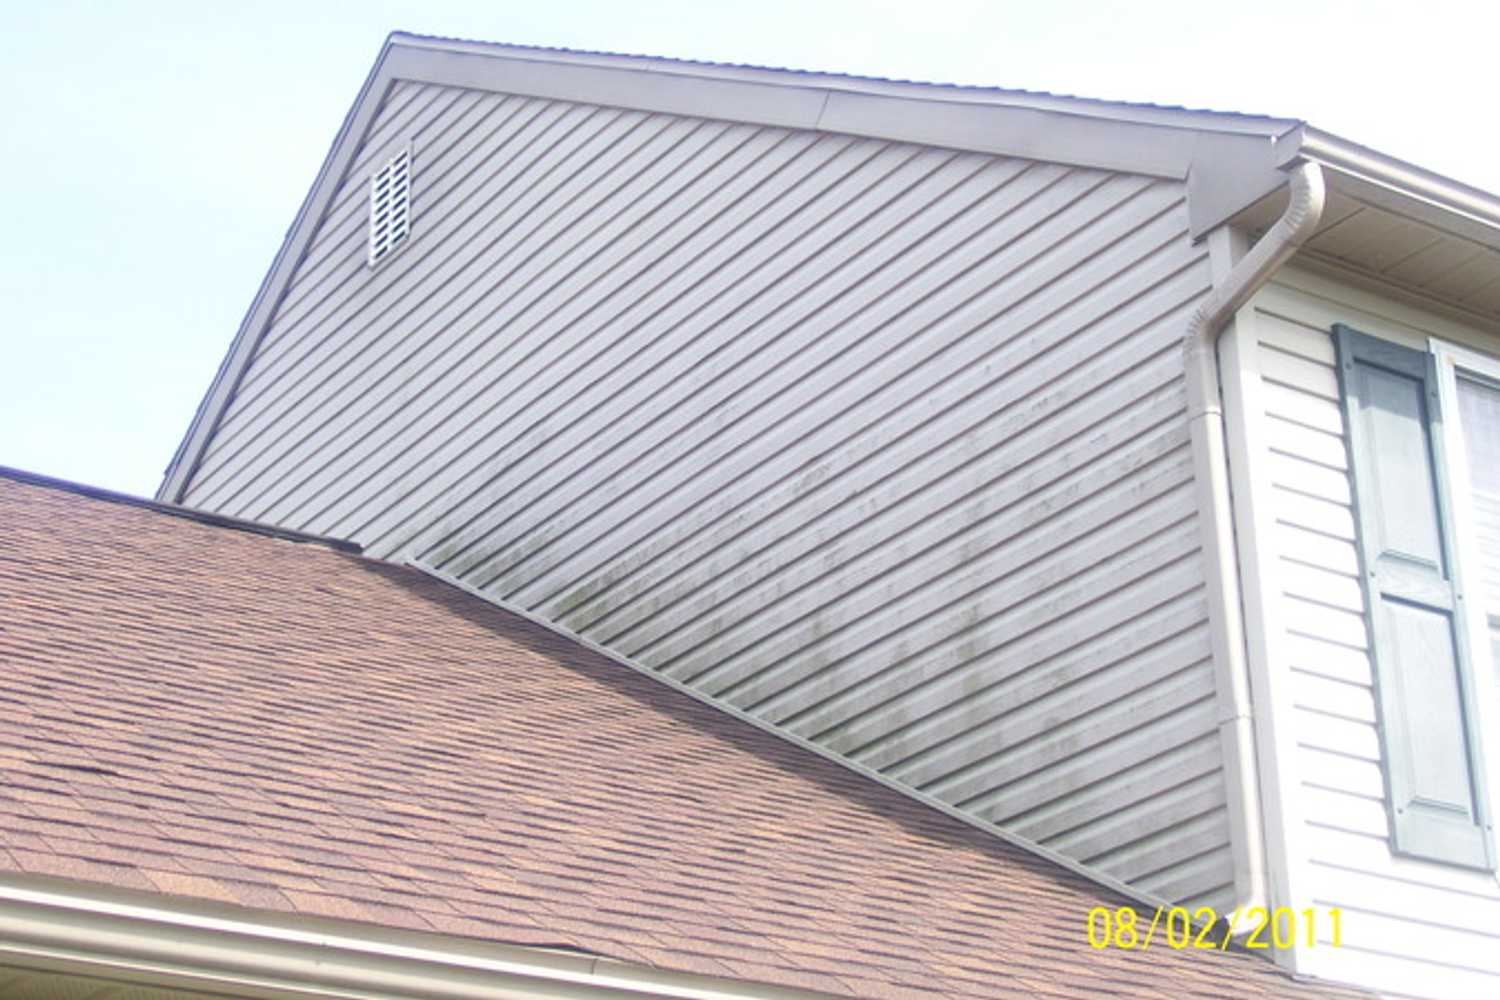 House Painting Company | Power Washing Company | Roof Shingle Cleaning Berks County PA